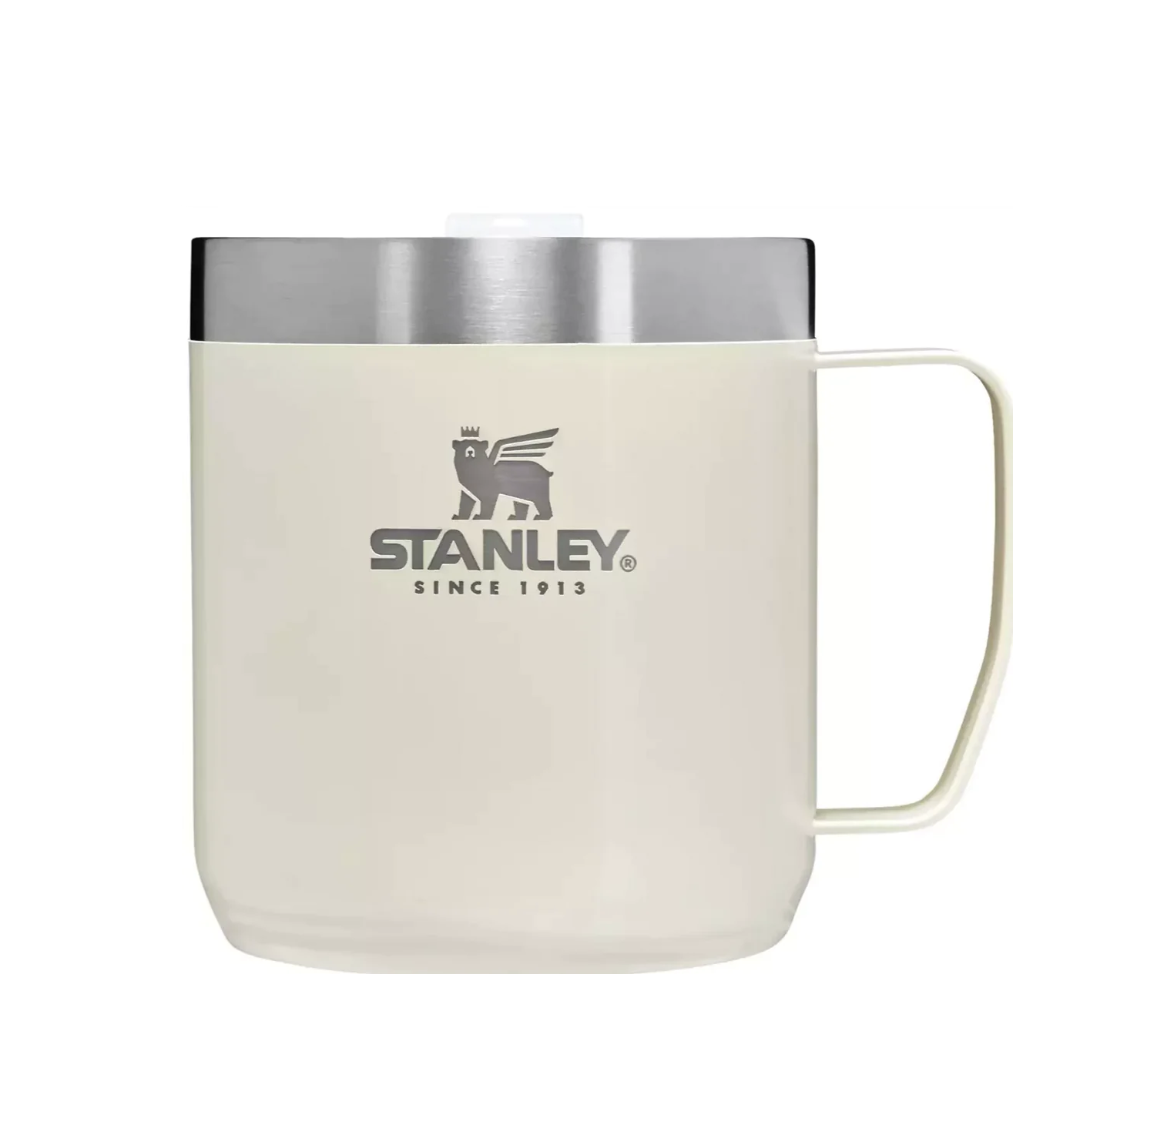  Stanley Legendary Camp Mug, 12oz, Stainless Steel Vacuum  Insulated Coffee Mug with Drink-Thru Lid (Lagoon/Polar)